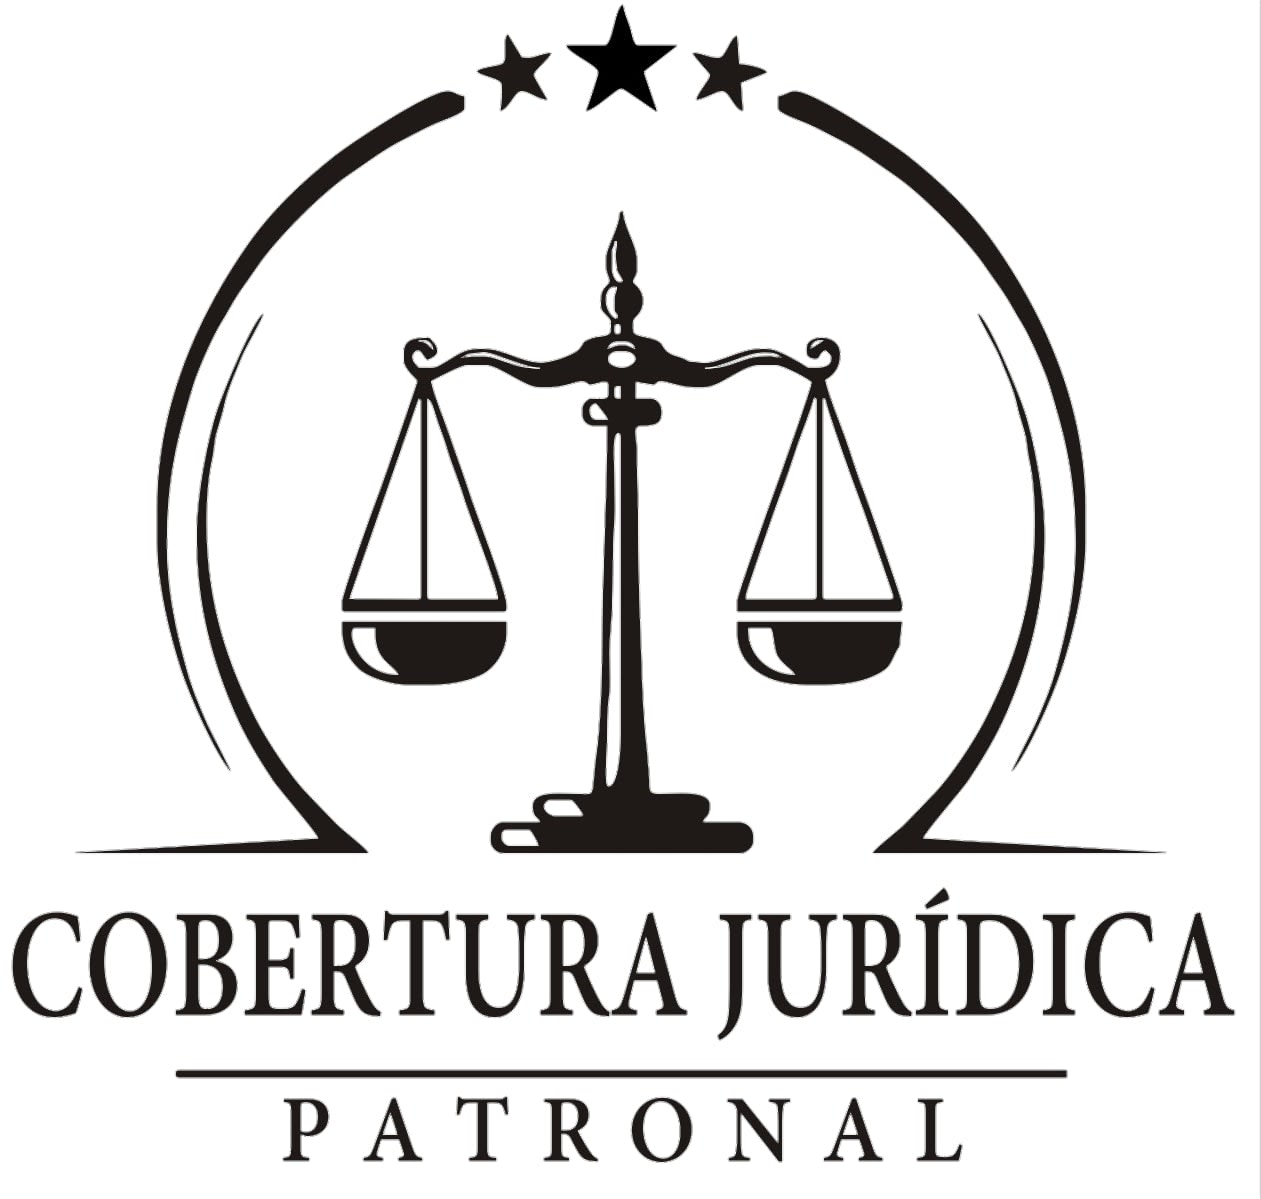 Cobertura Jurídica Patronal